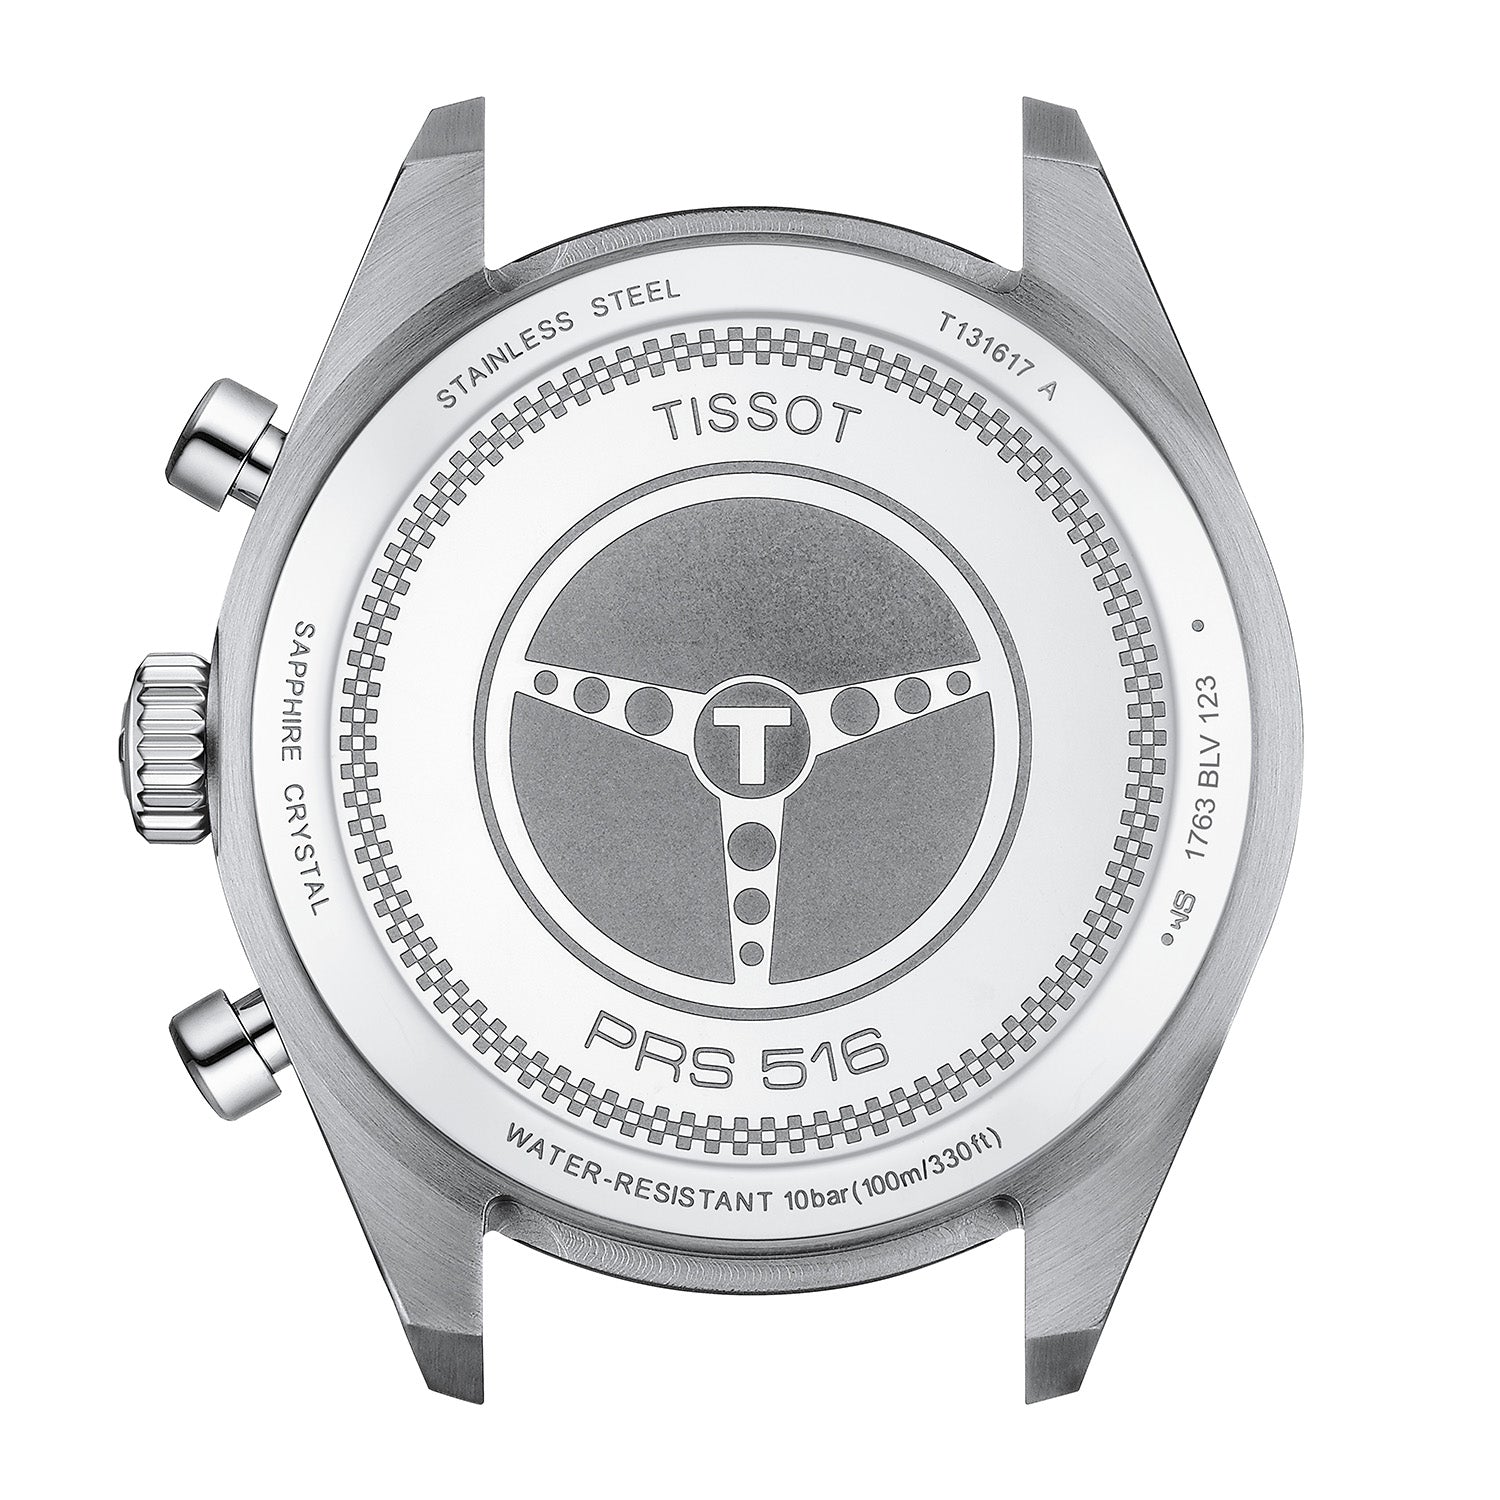 PRS 516 Stainless Steel 45mm Silver Dial Quartz Strap Watch